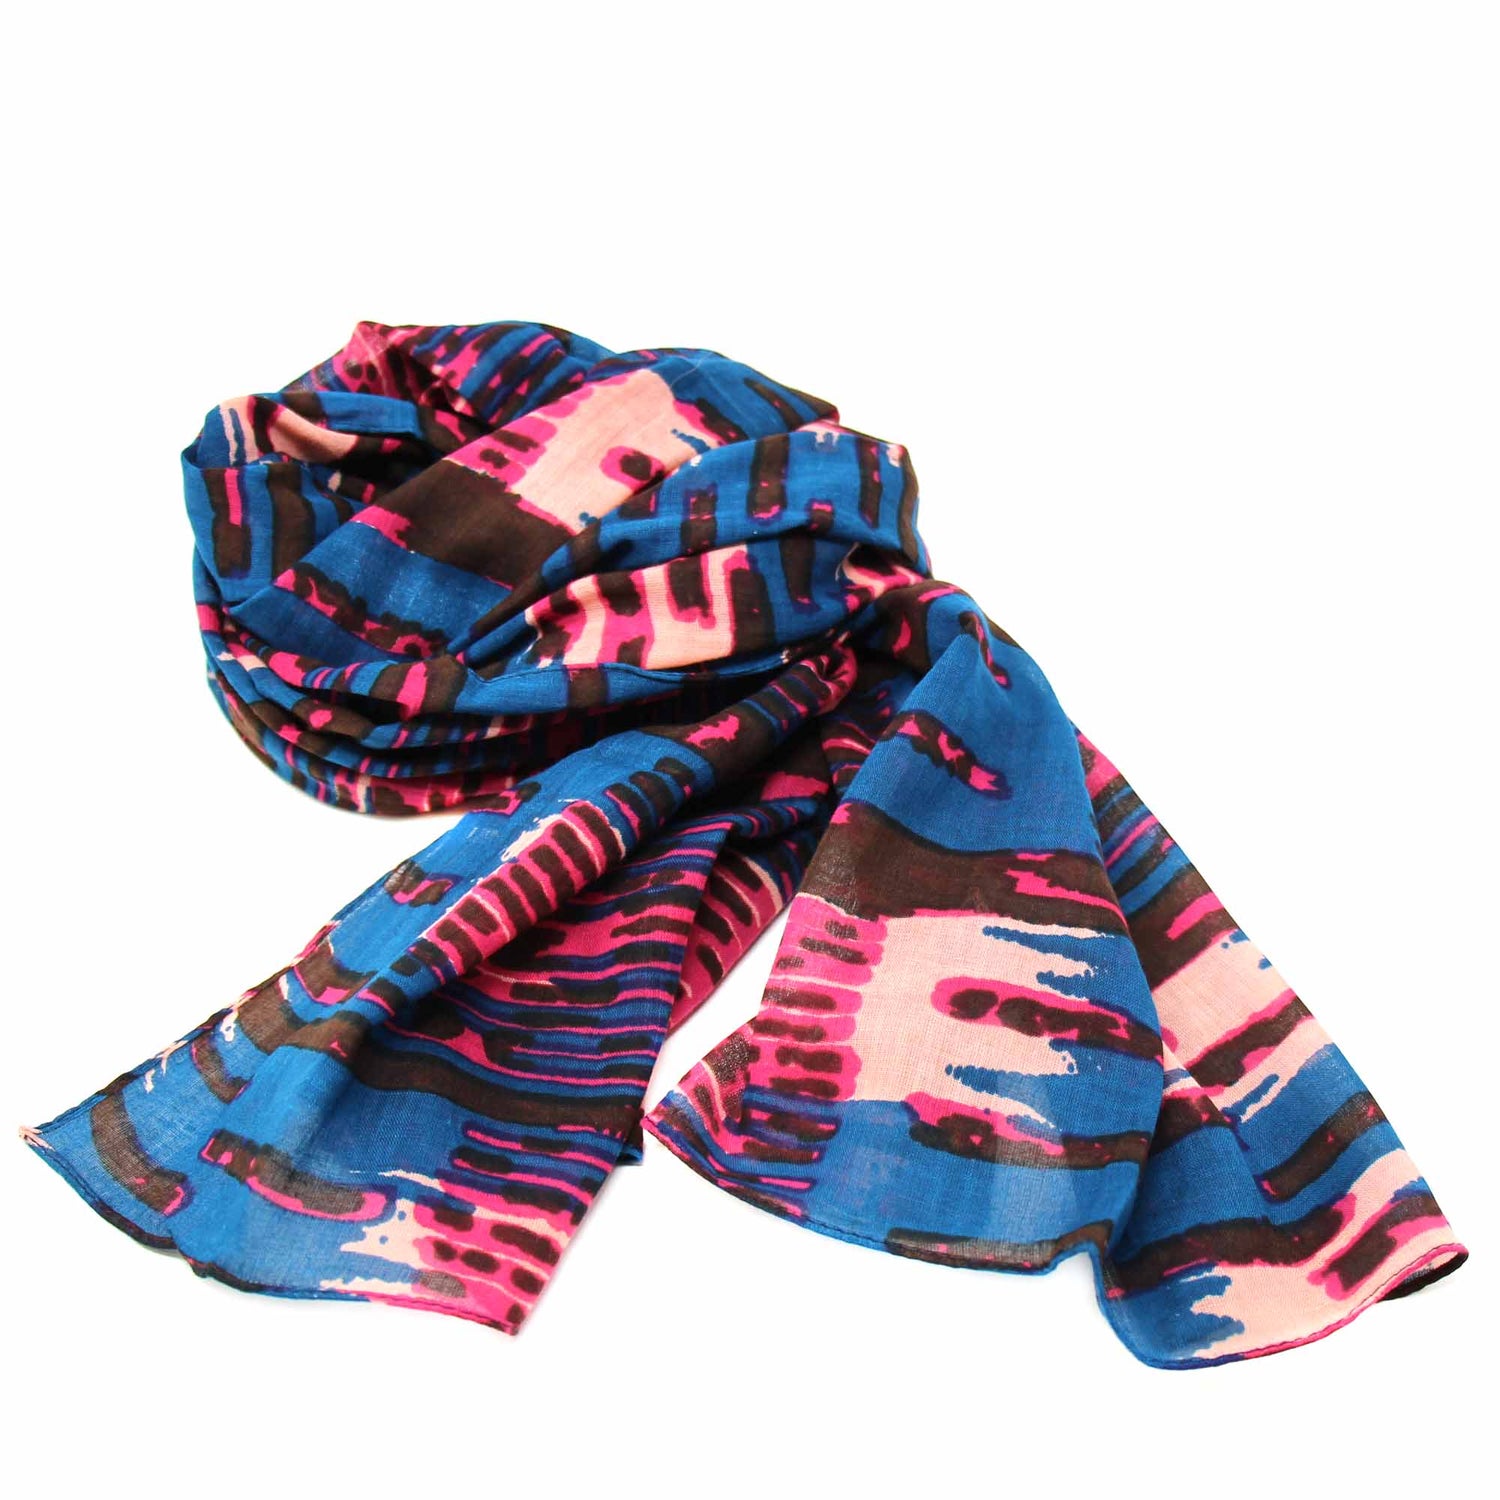 printed-dark-abstract-design-cotton-scarf